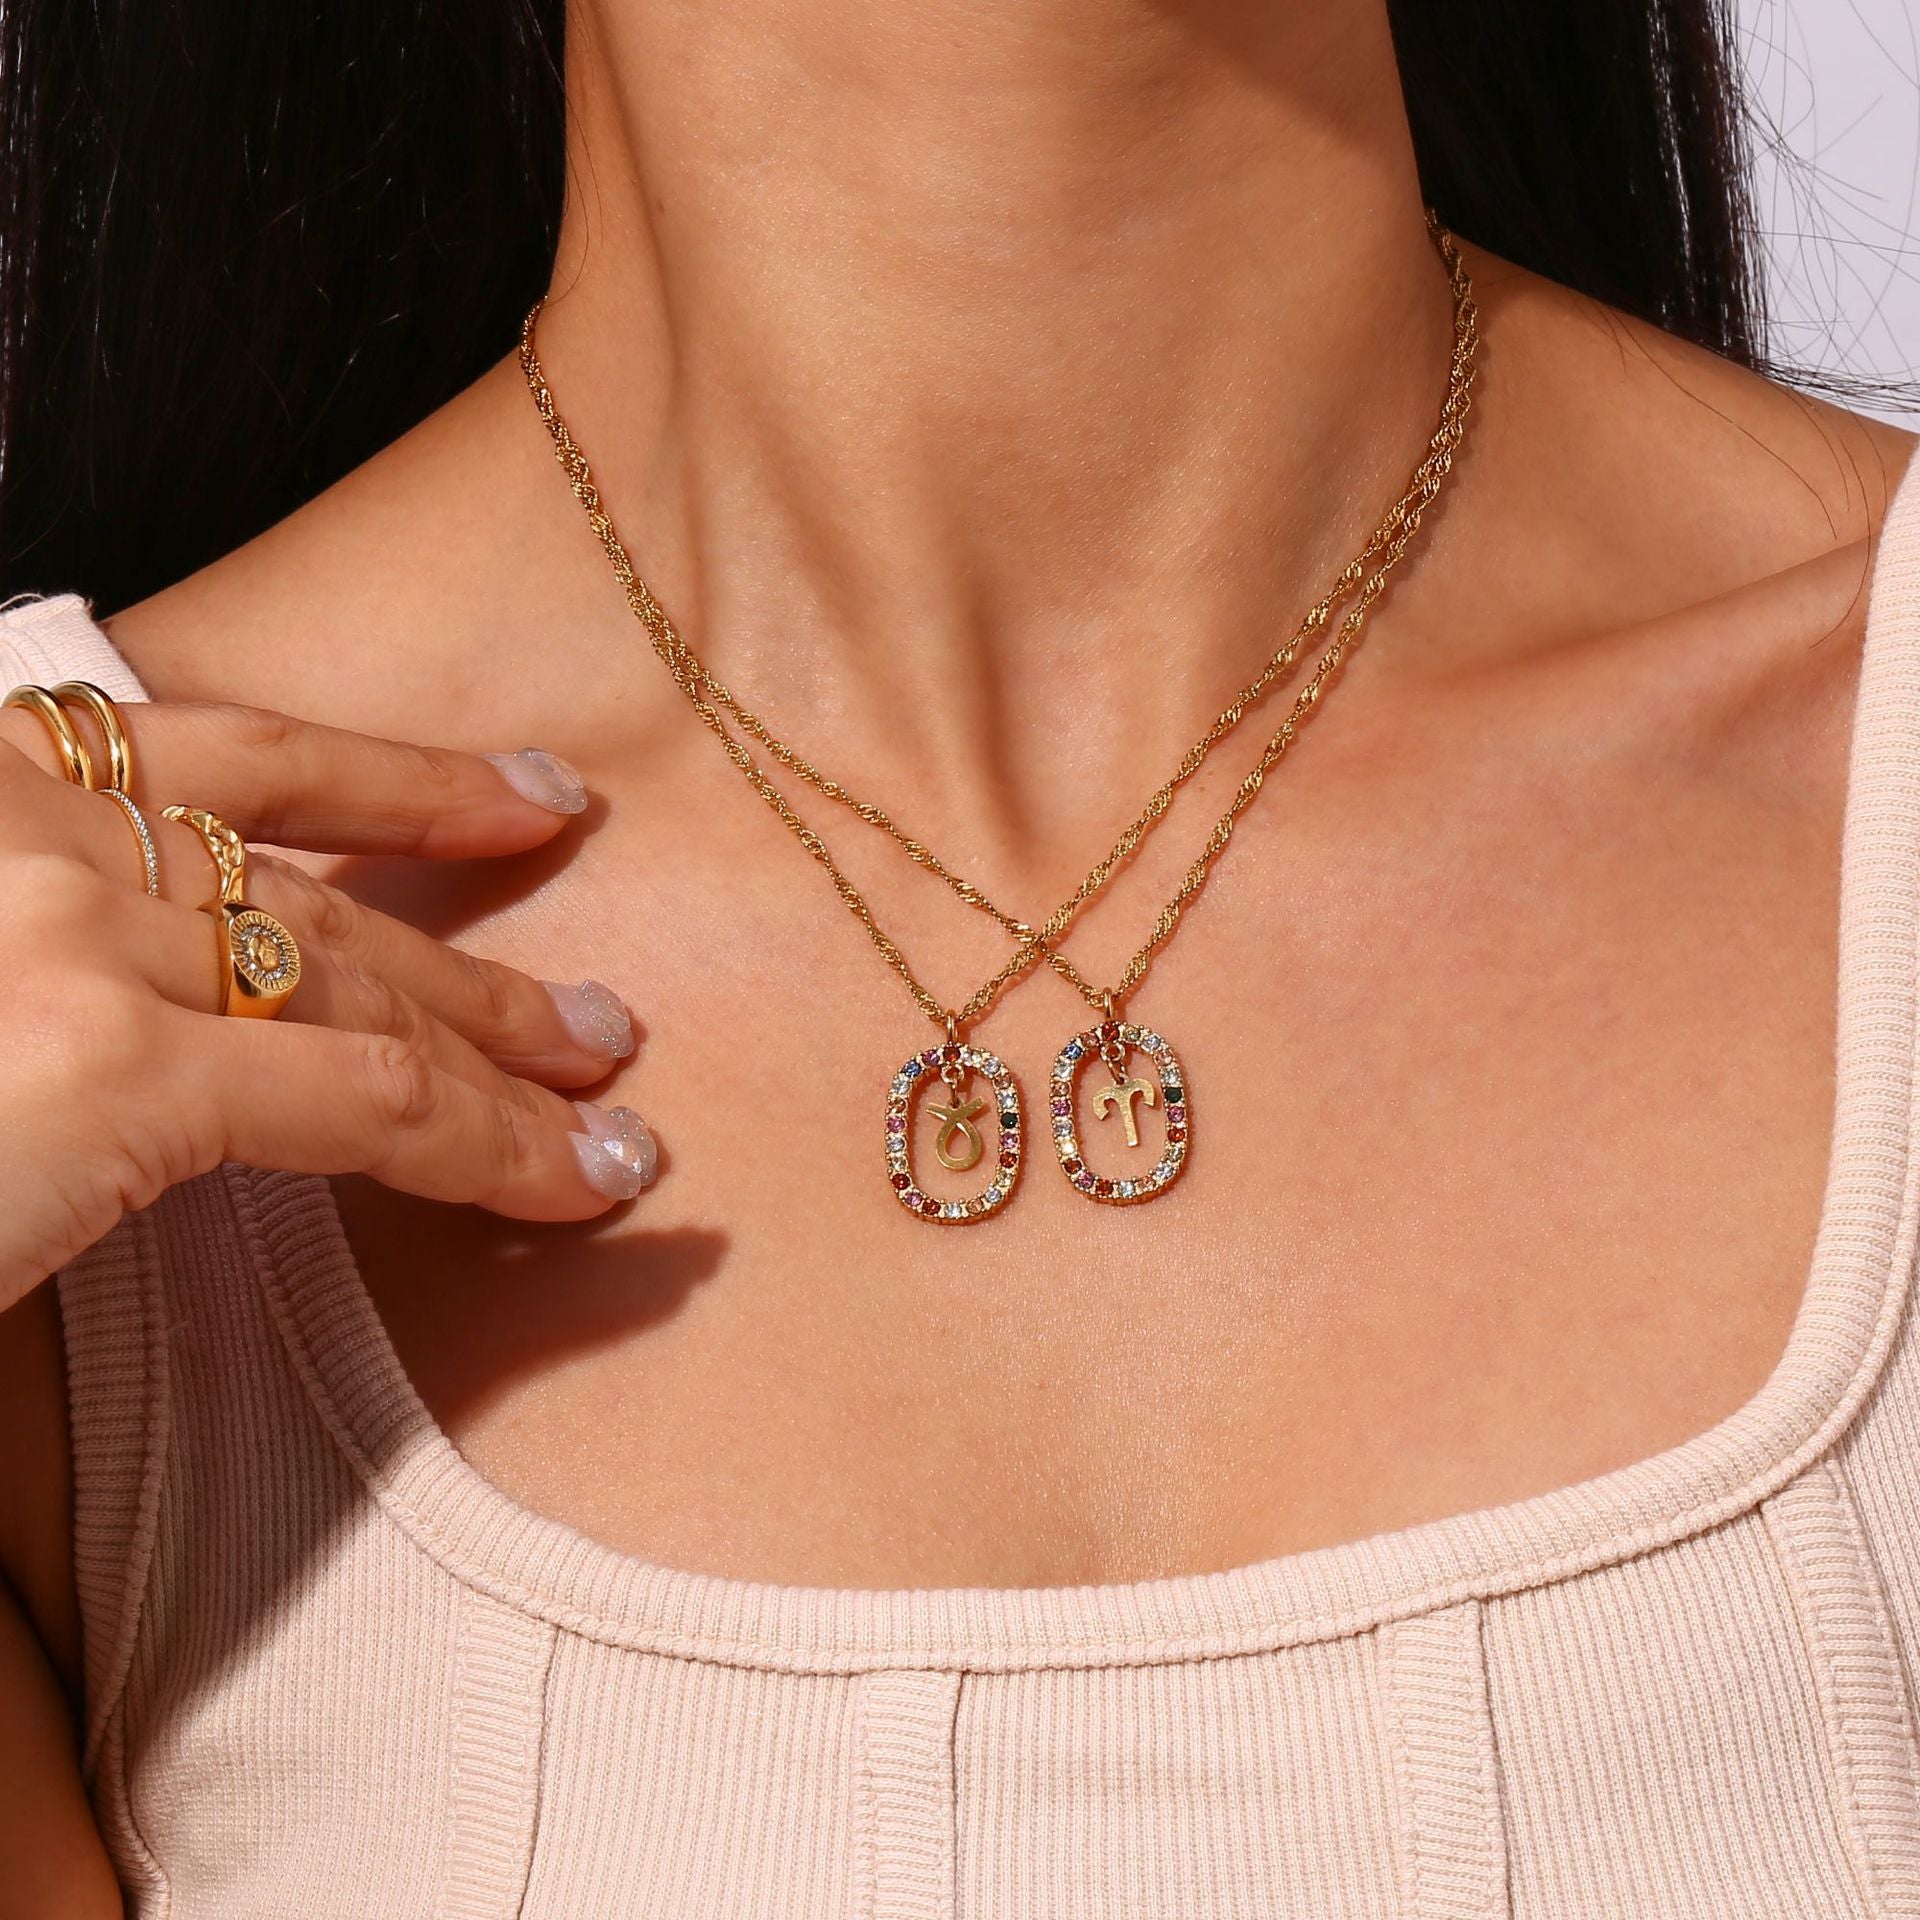 Colette Zodiac Gemstone Necklace